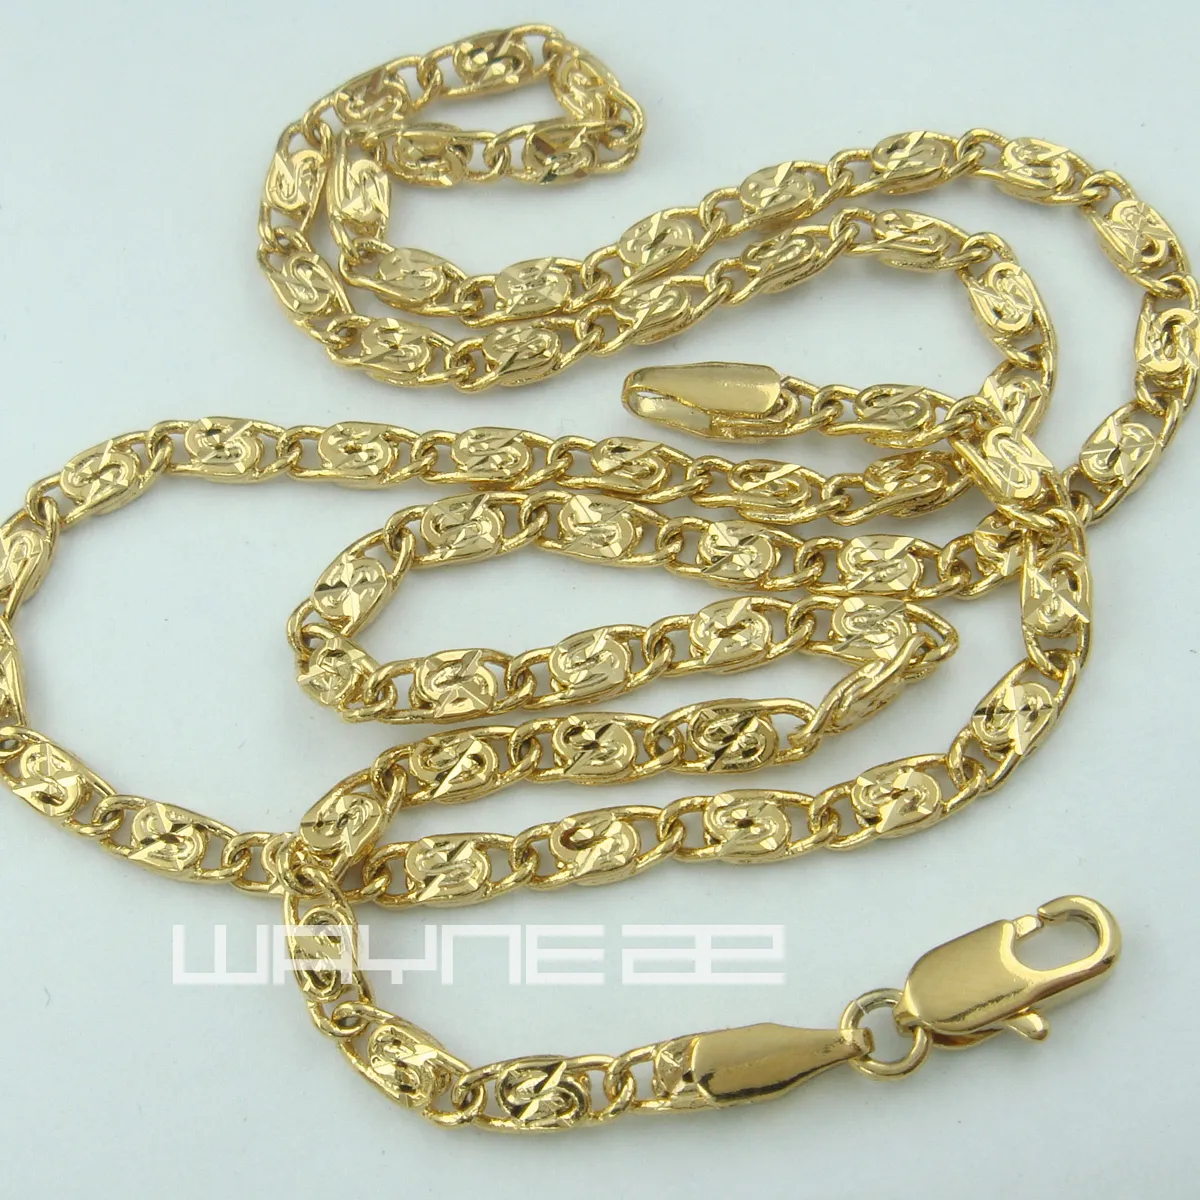 18K guld gf curb ringar länk kedja kvinnans fasta långa halsband n245